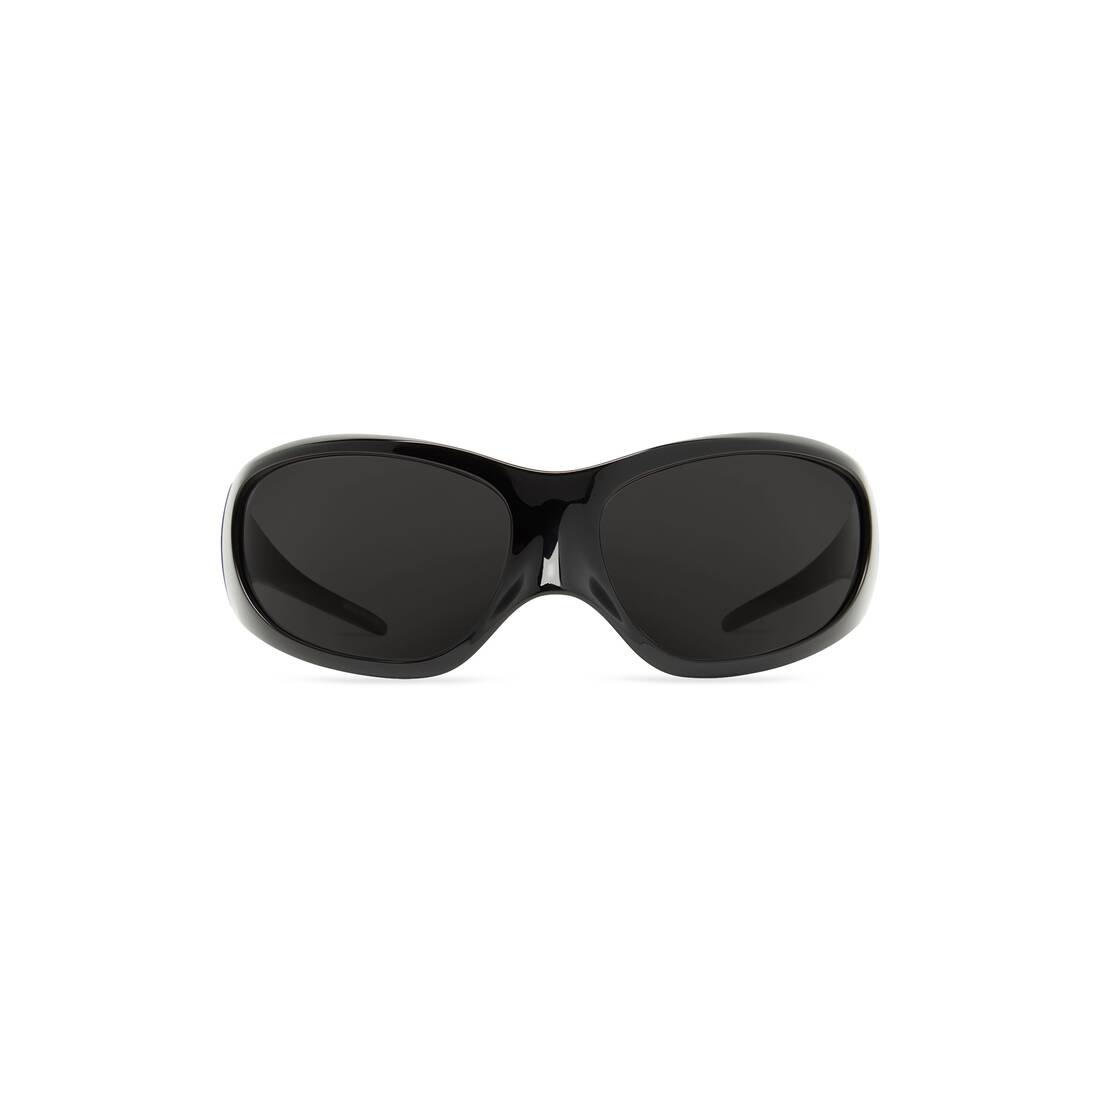 Update 162+ xxl sunglasses polarized best